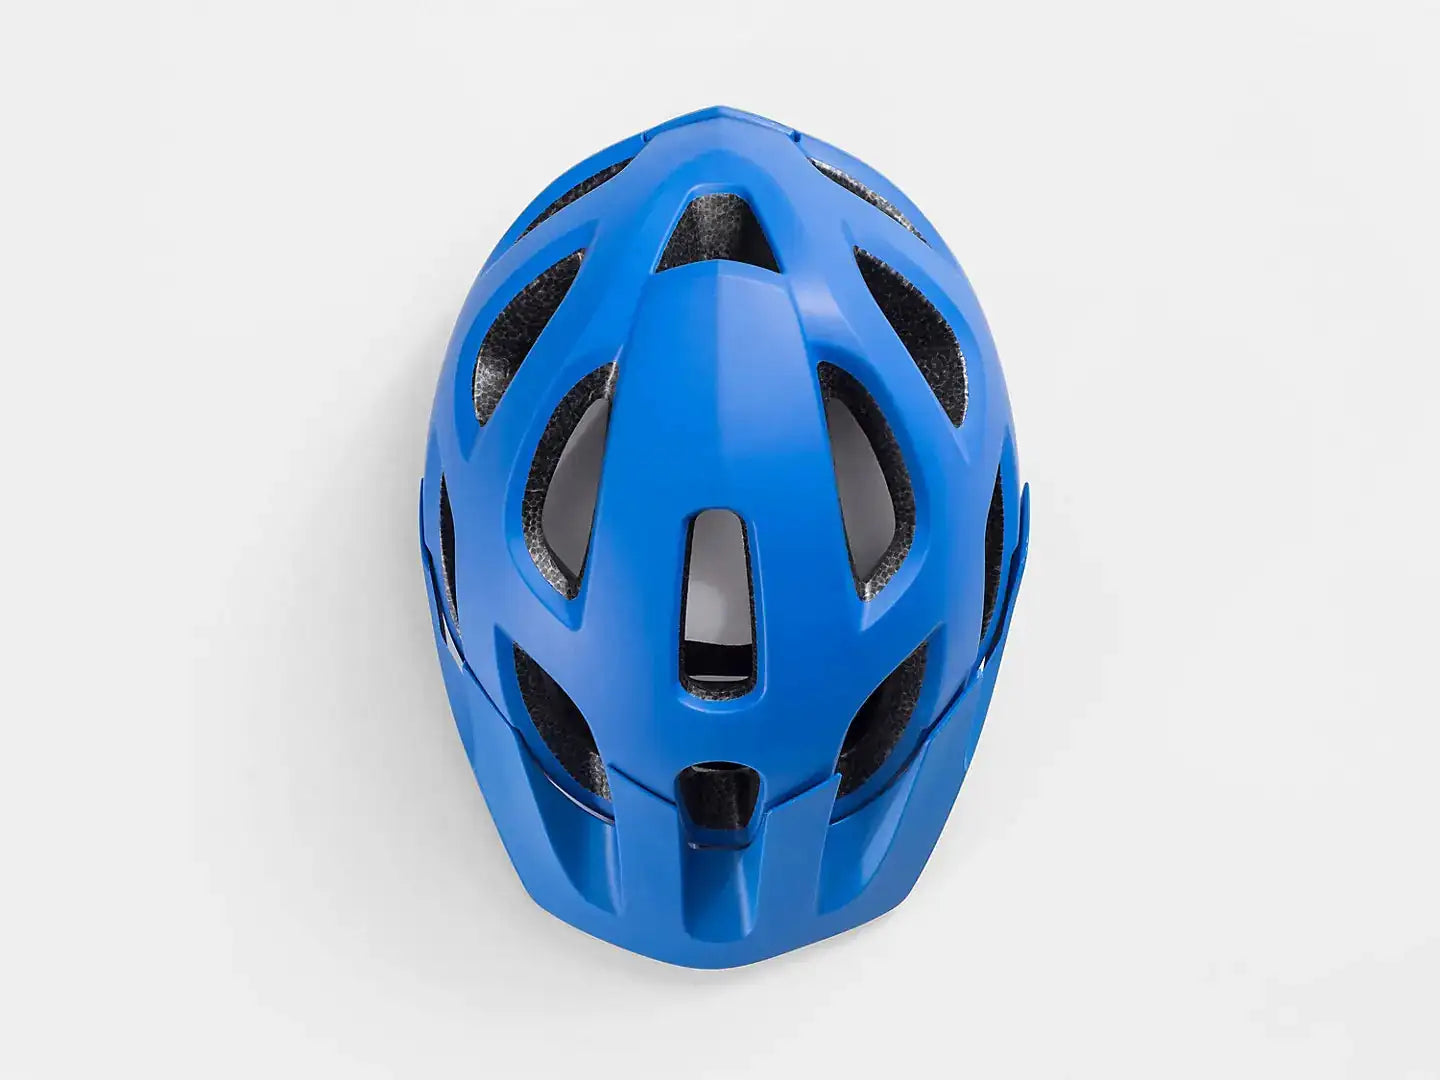 Helmet Bontrager Tyro Youth Wheels Bikes